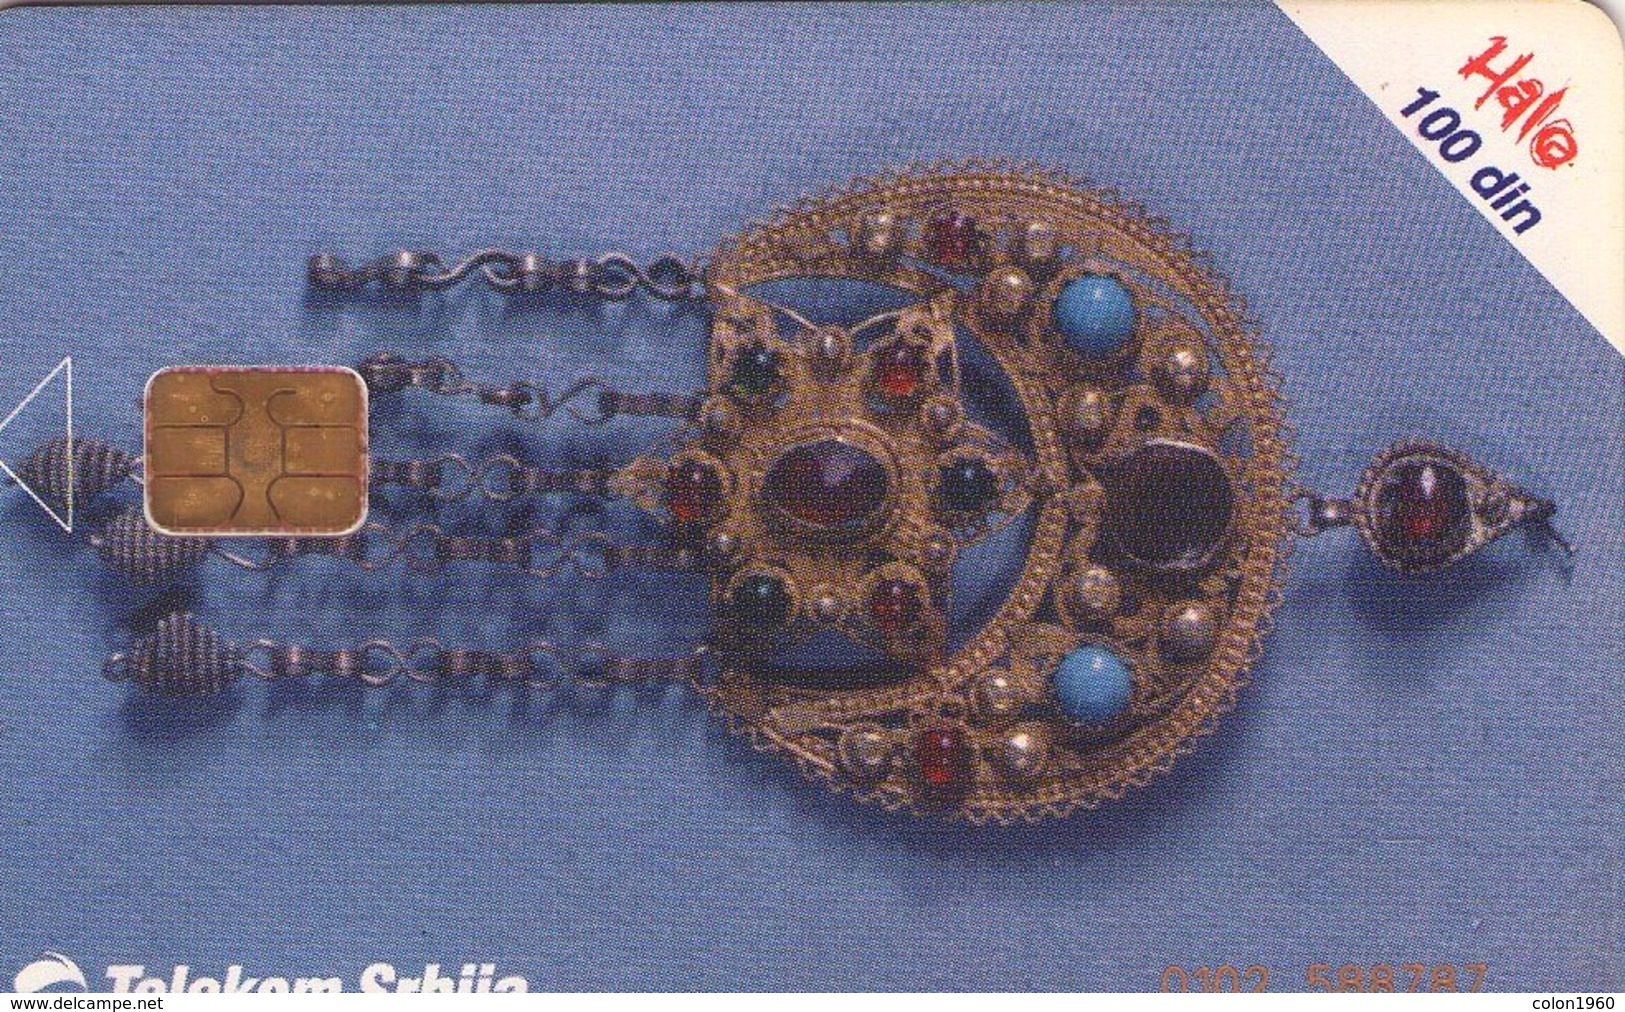 SERBIA. RS-TKS-0023. Hair Jewelry From Djakovica, 19th Century. 2001-06. (284) - Yugoslavia